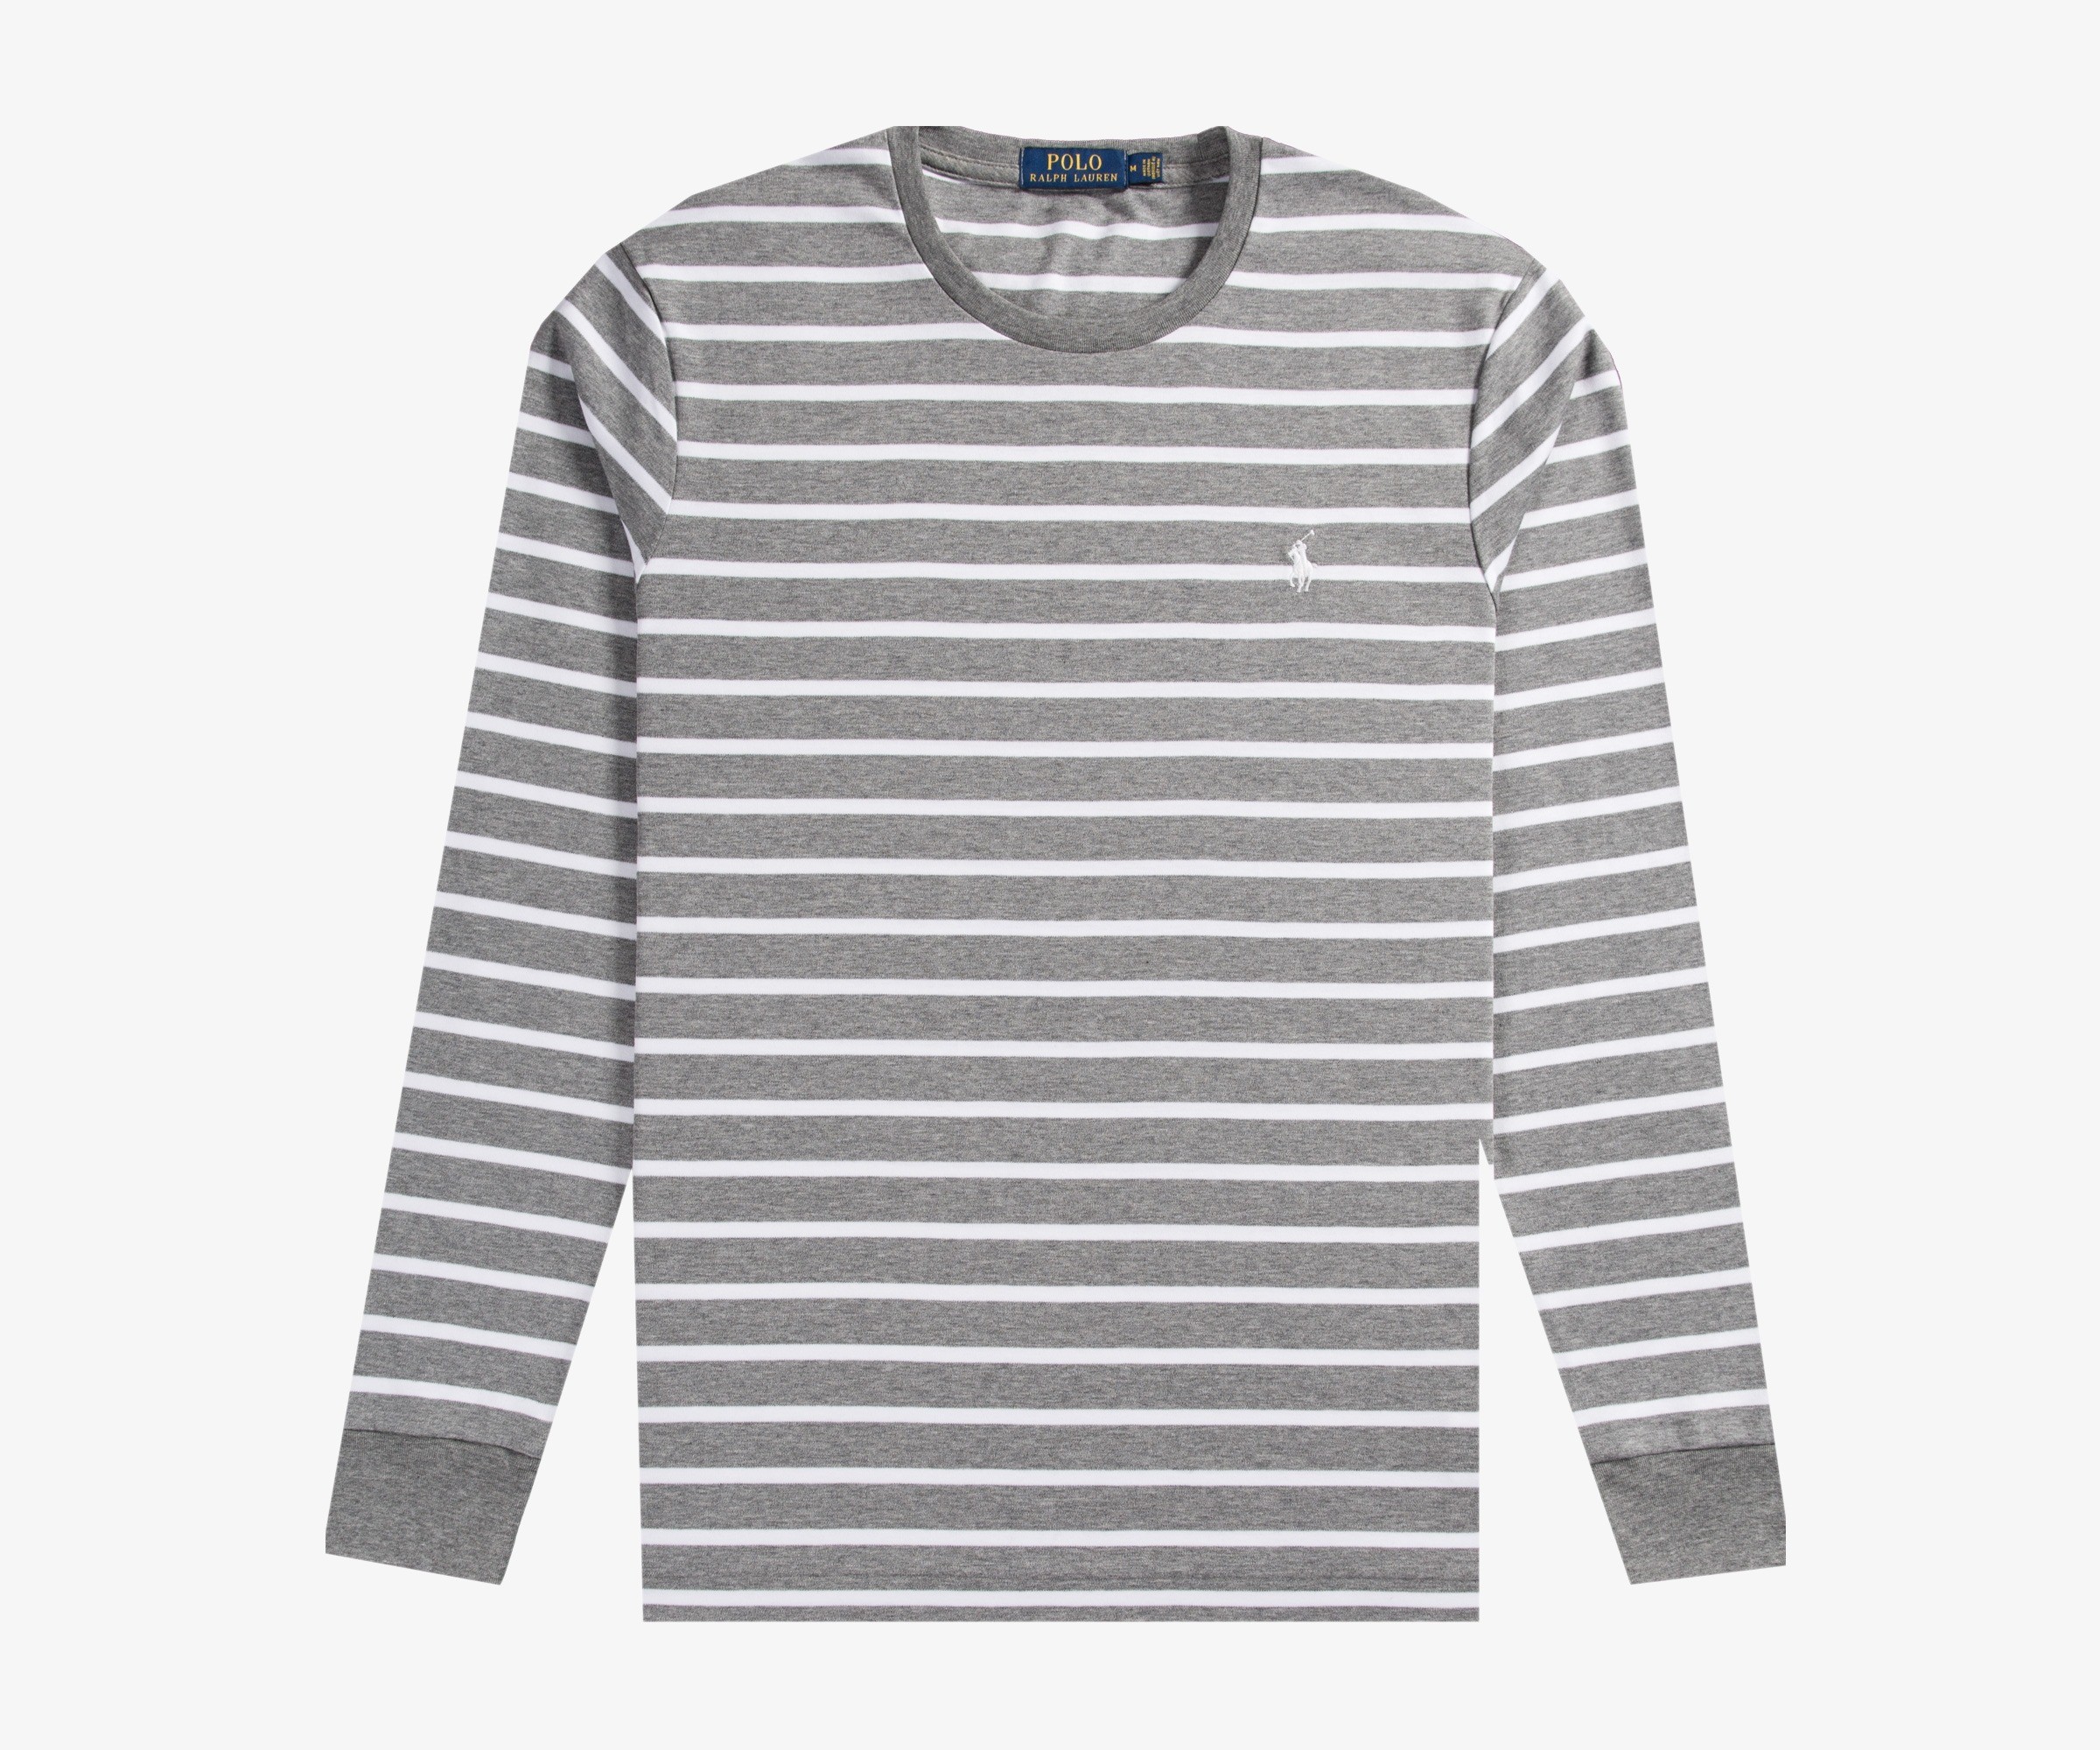 Polo Ralph Lauren Long Sleeve Crew Neck Striped T-shirt Grey/White